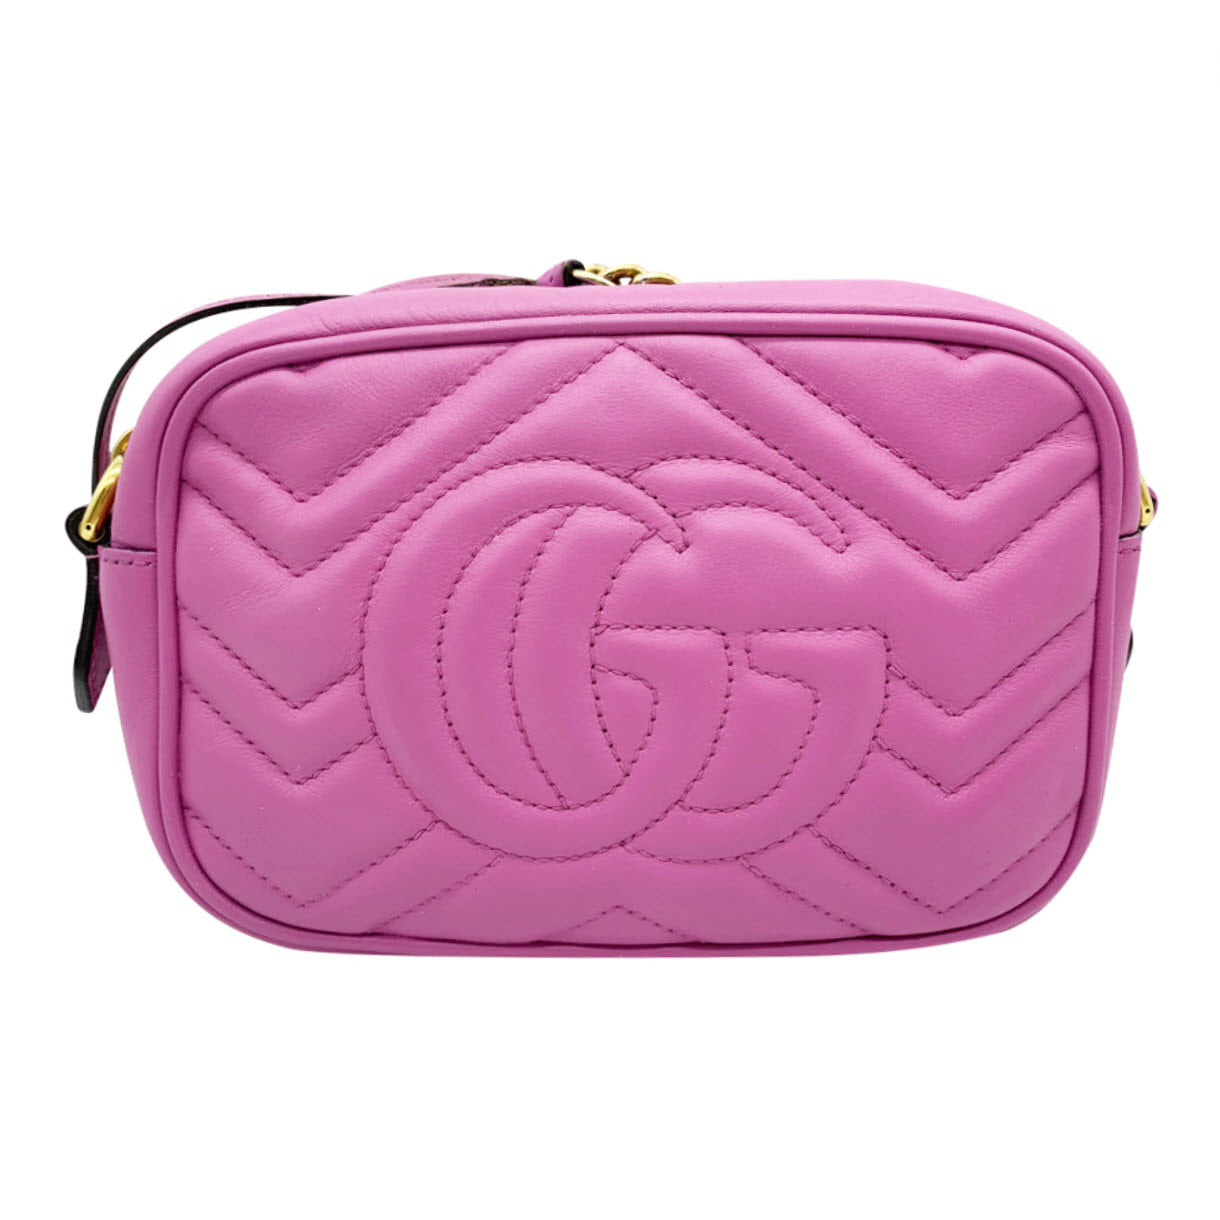 GG Matelassé mini bag in pink leather